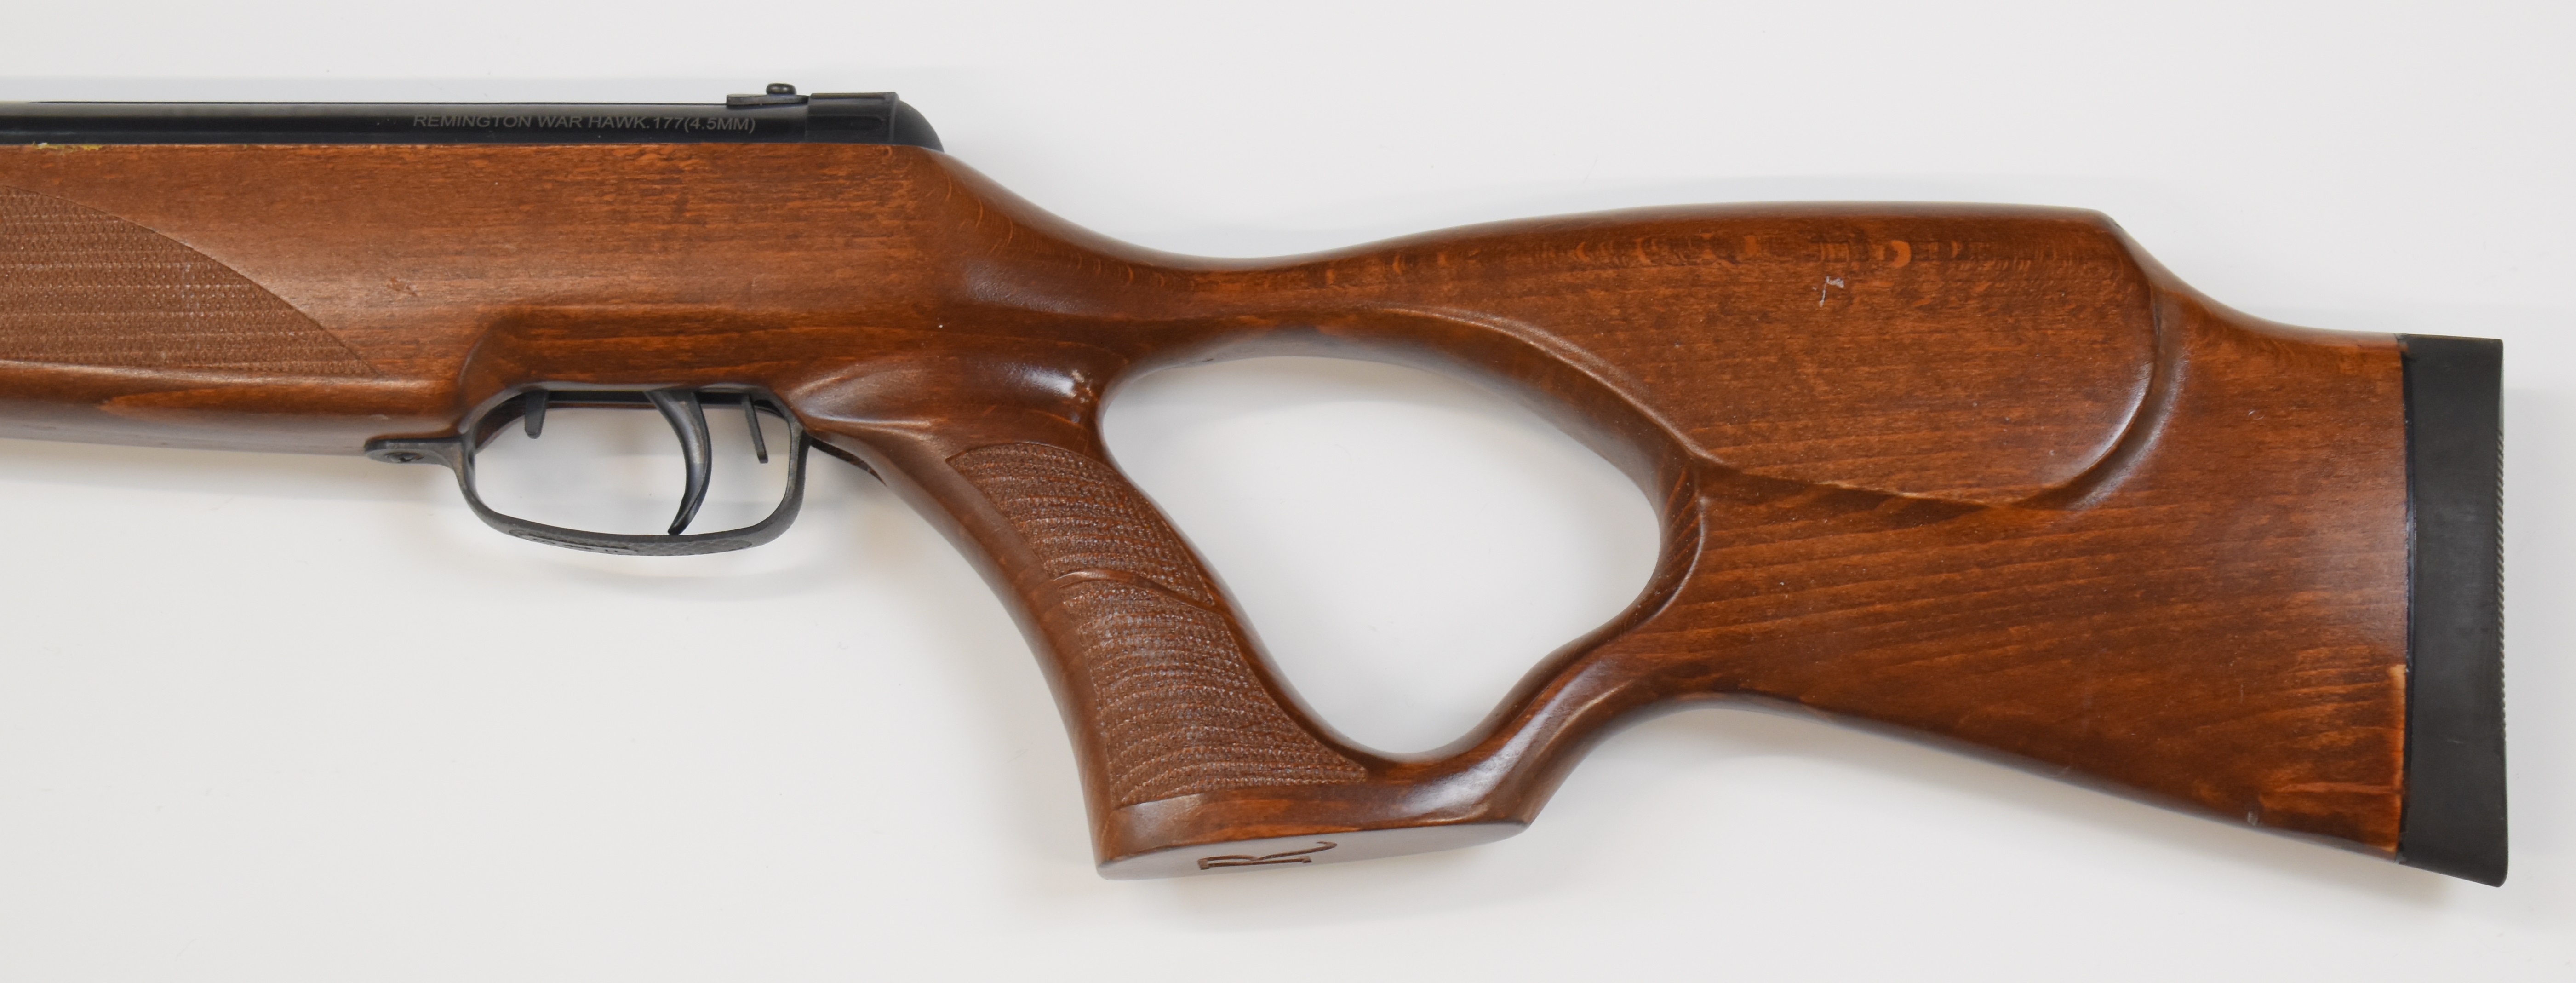 Remington Warhawk .177 under-lever air rifle with textured semi-pistol grip, raised cheek piece - Image 8 of 11